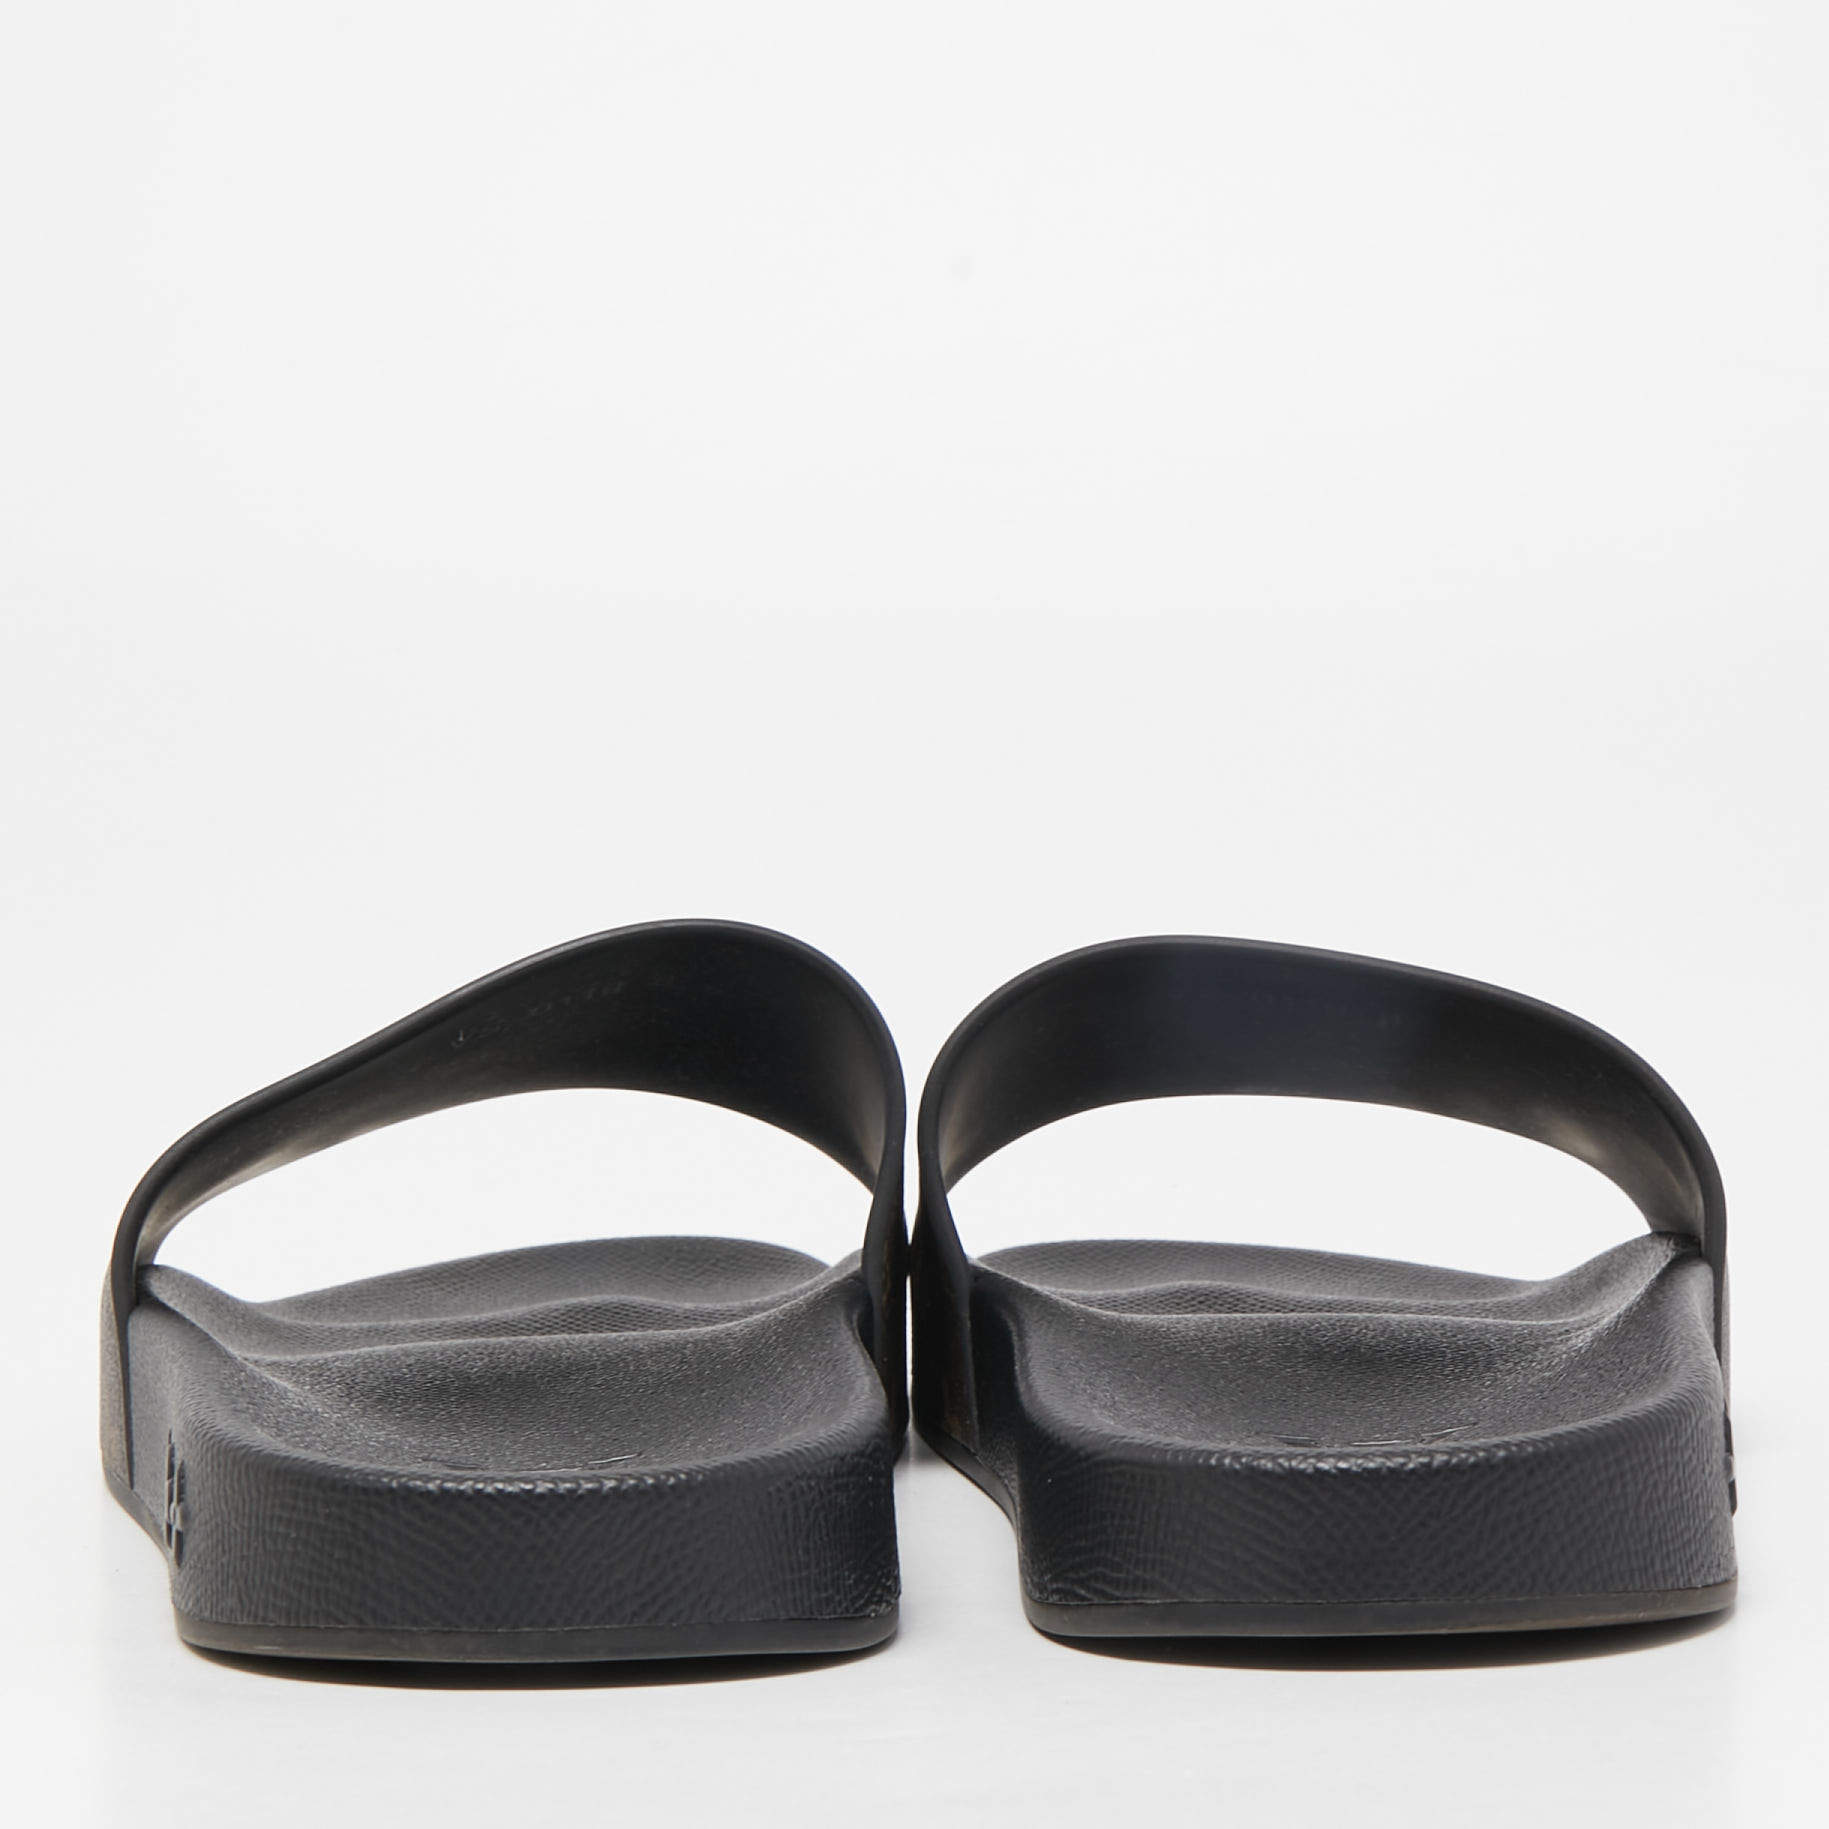 Waterfront leather sandals Louis Vuitton Black size 42 EU in